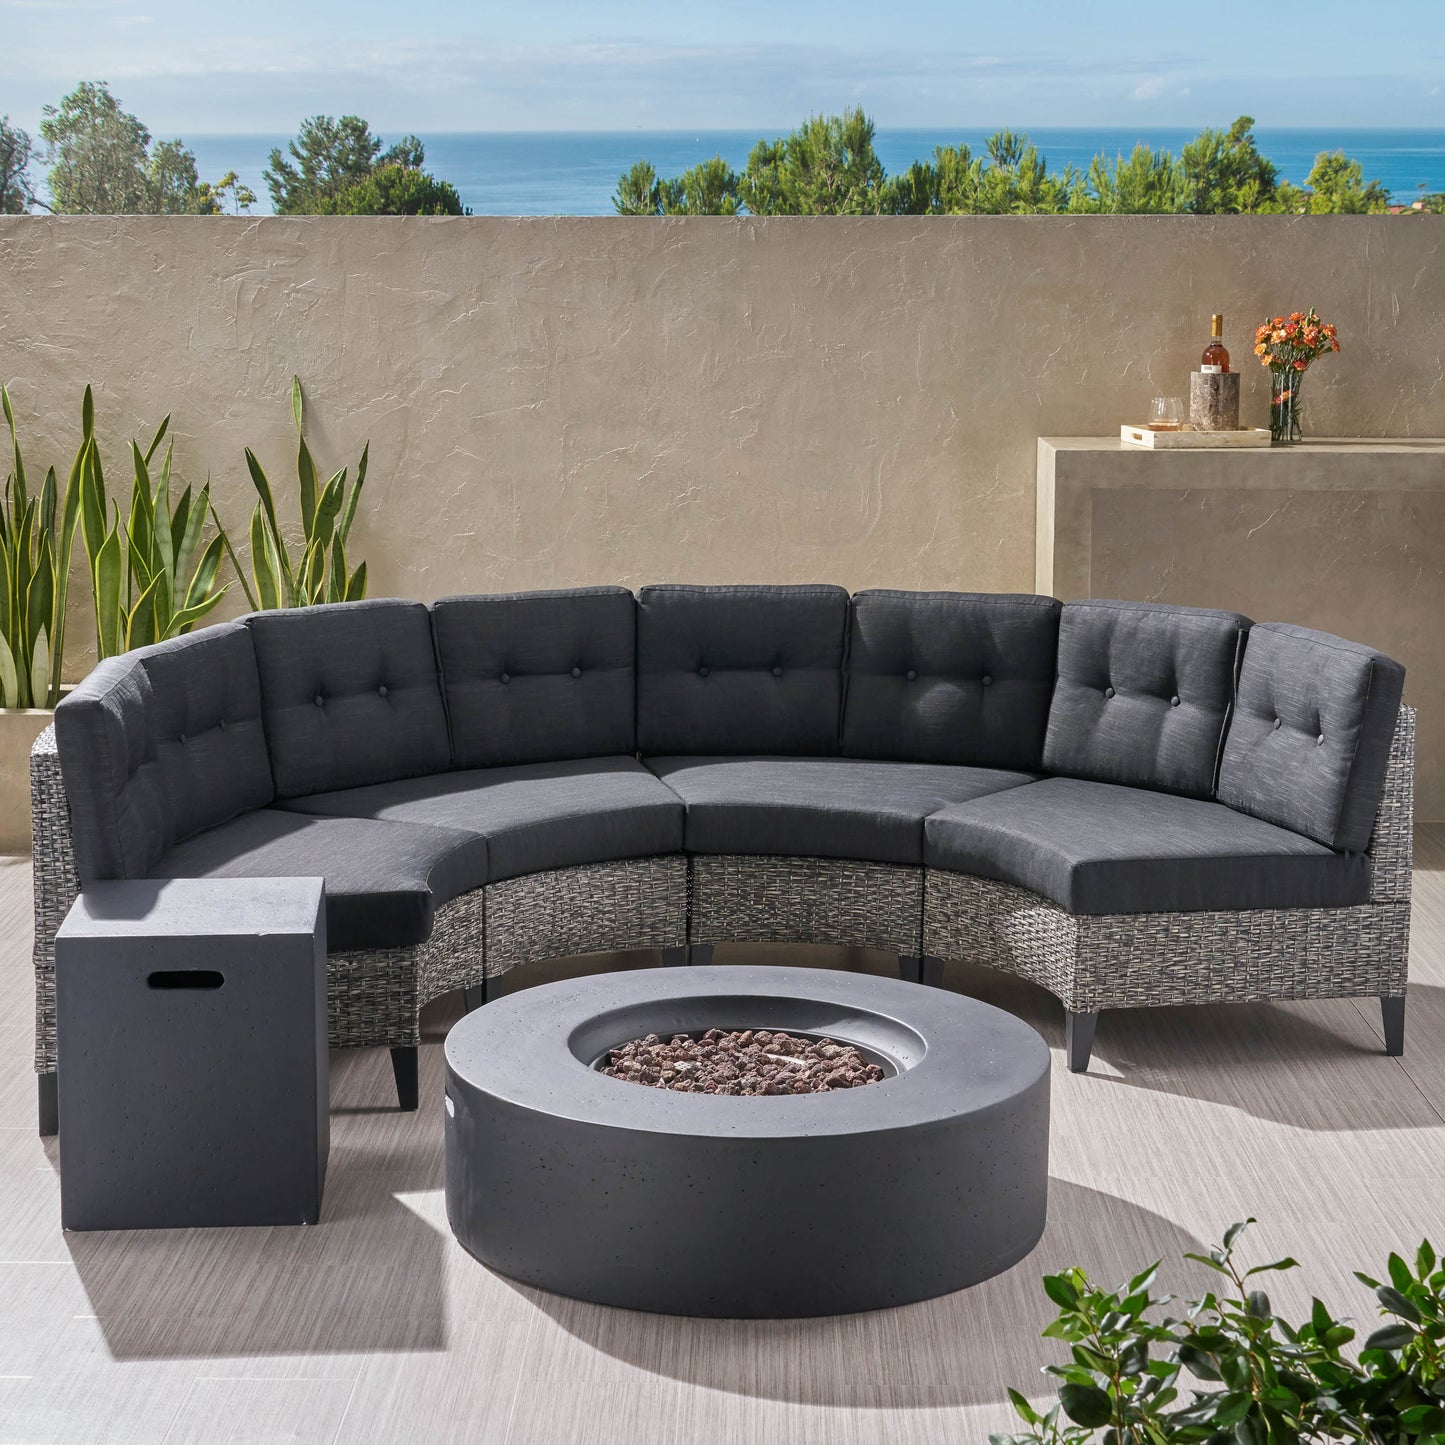 Nessett Outdoor 6 Piece Mixed Black Wicker Half Round Sofa Set with Dark Grey Fire Table